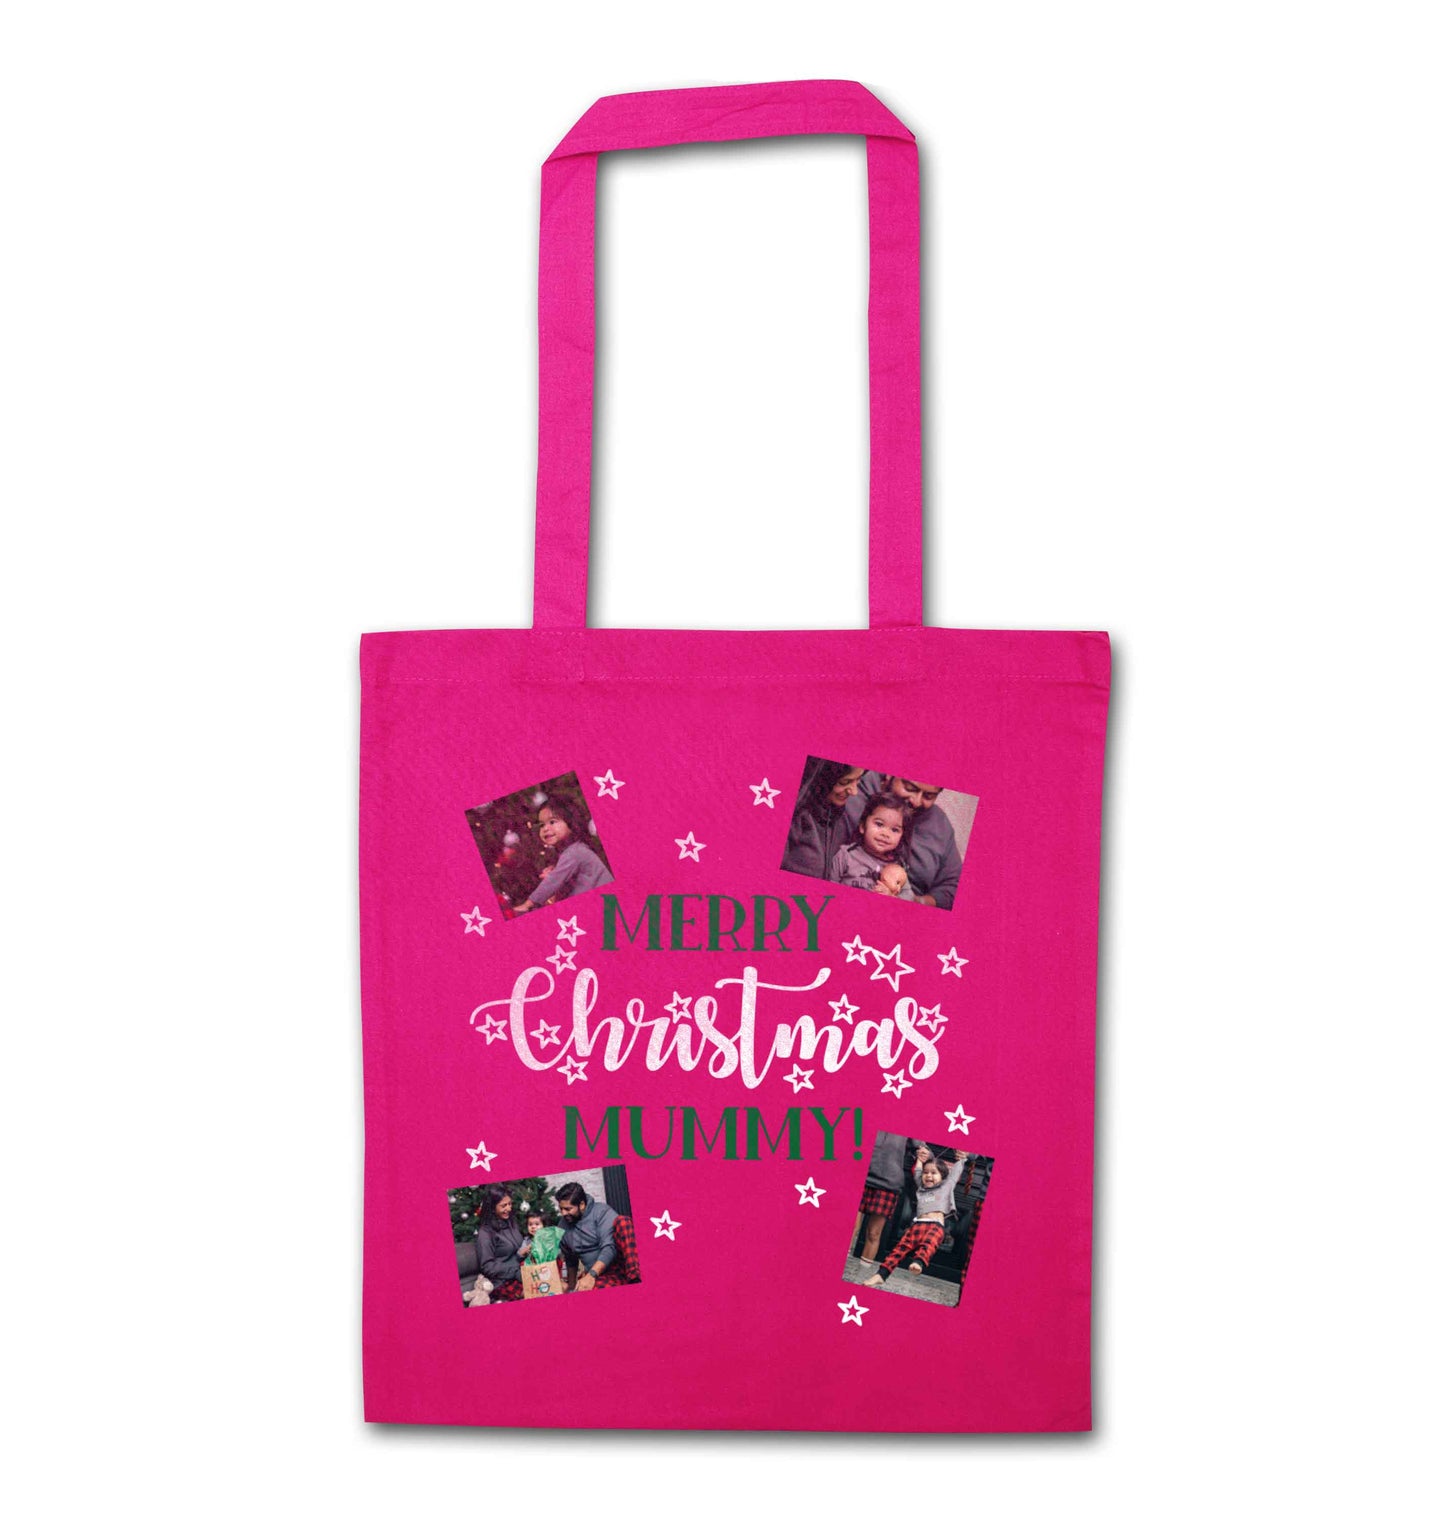 Merry Christmas Mummy pink tote bag